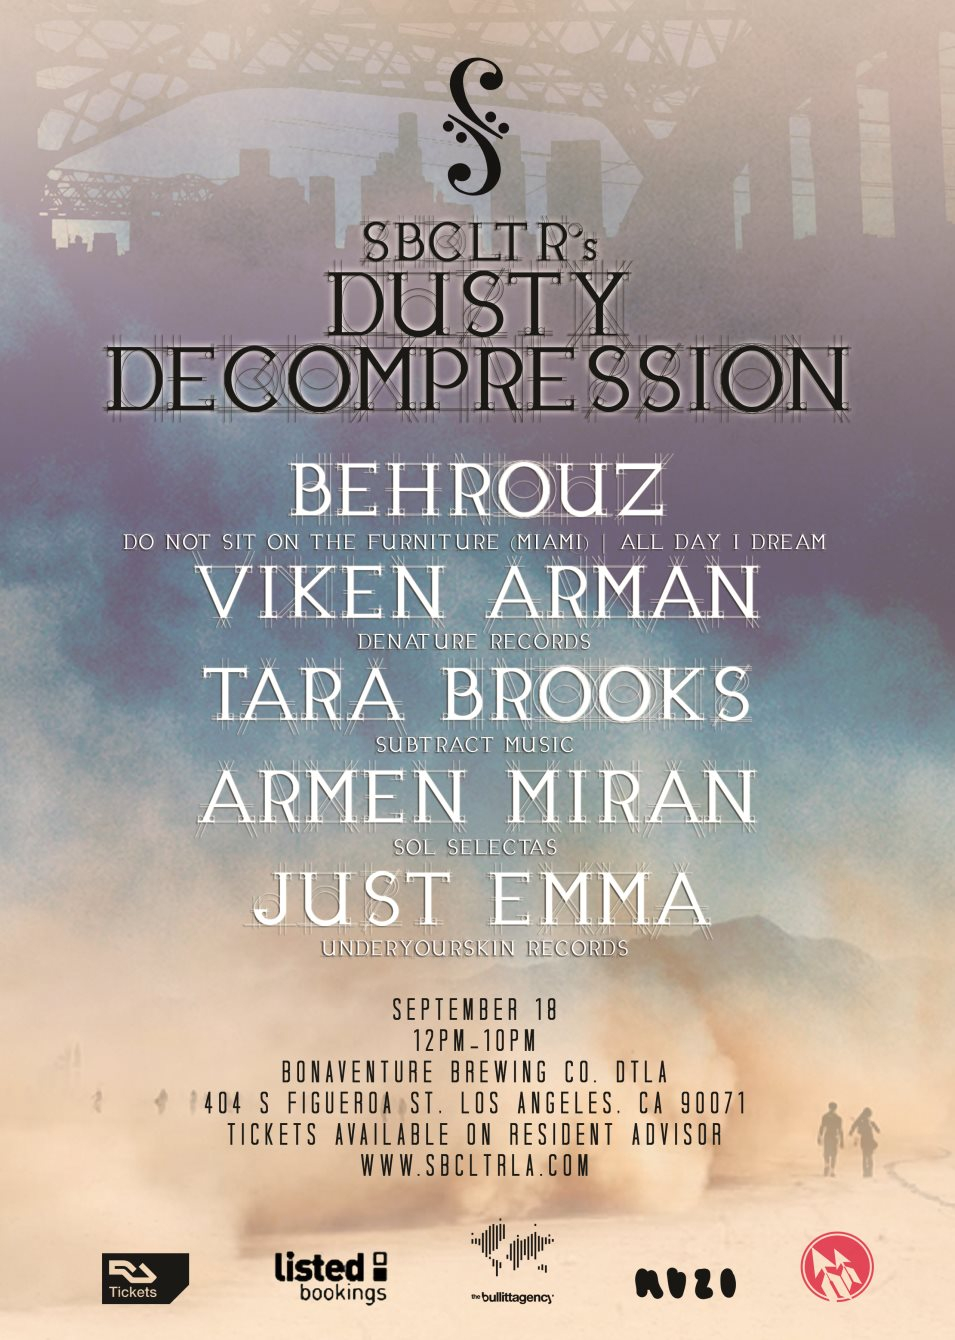 Sbcltr's Dusty Decompression with Behrouz, Viken Arman, Tara Brooks, Armen Miran and Just Emma - Flyer front